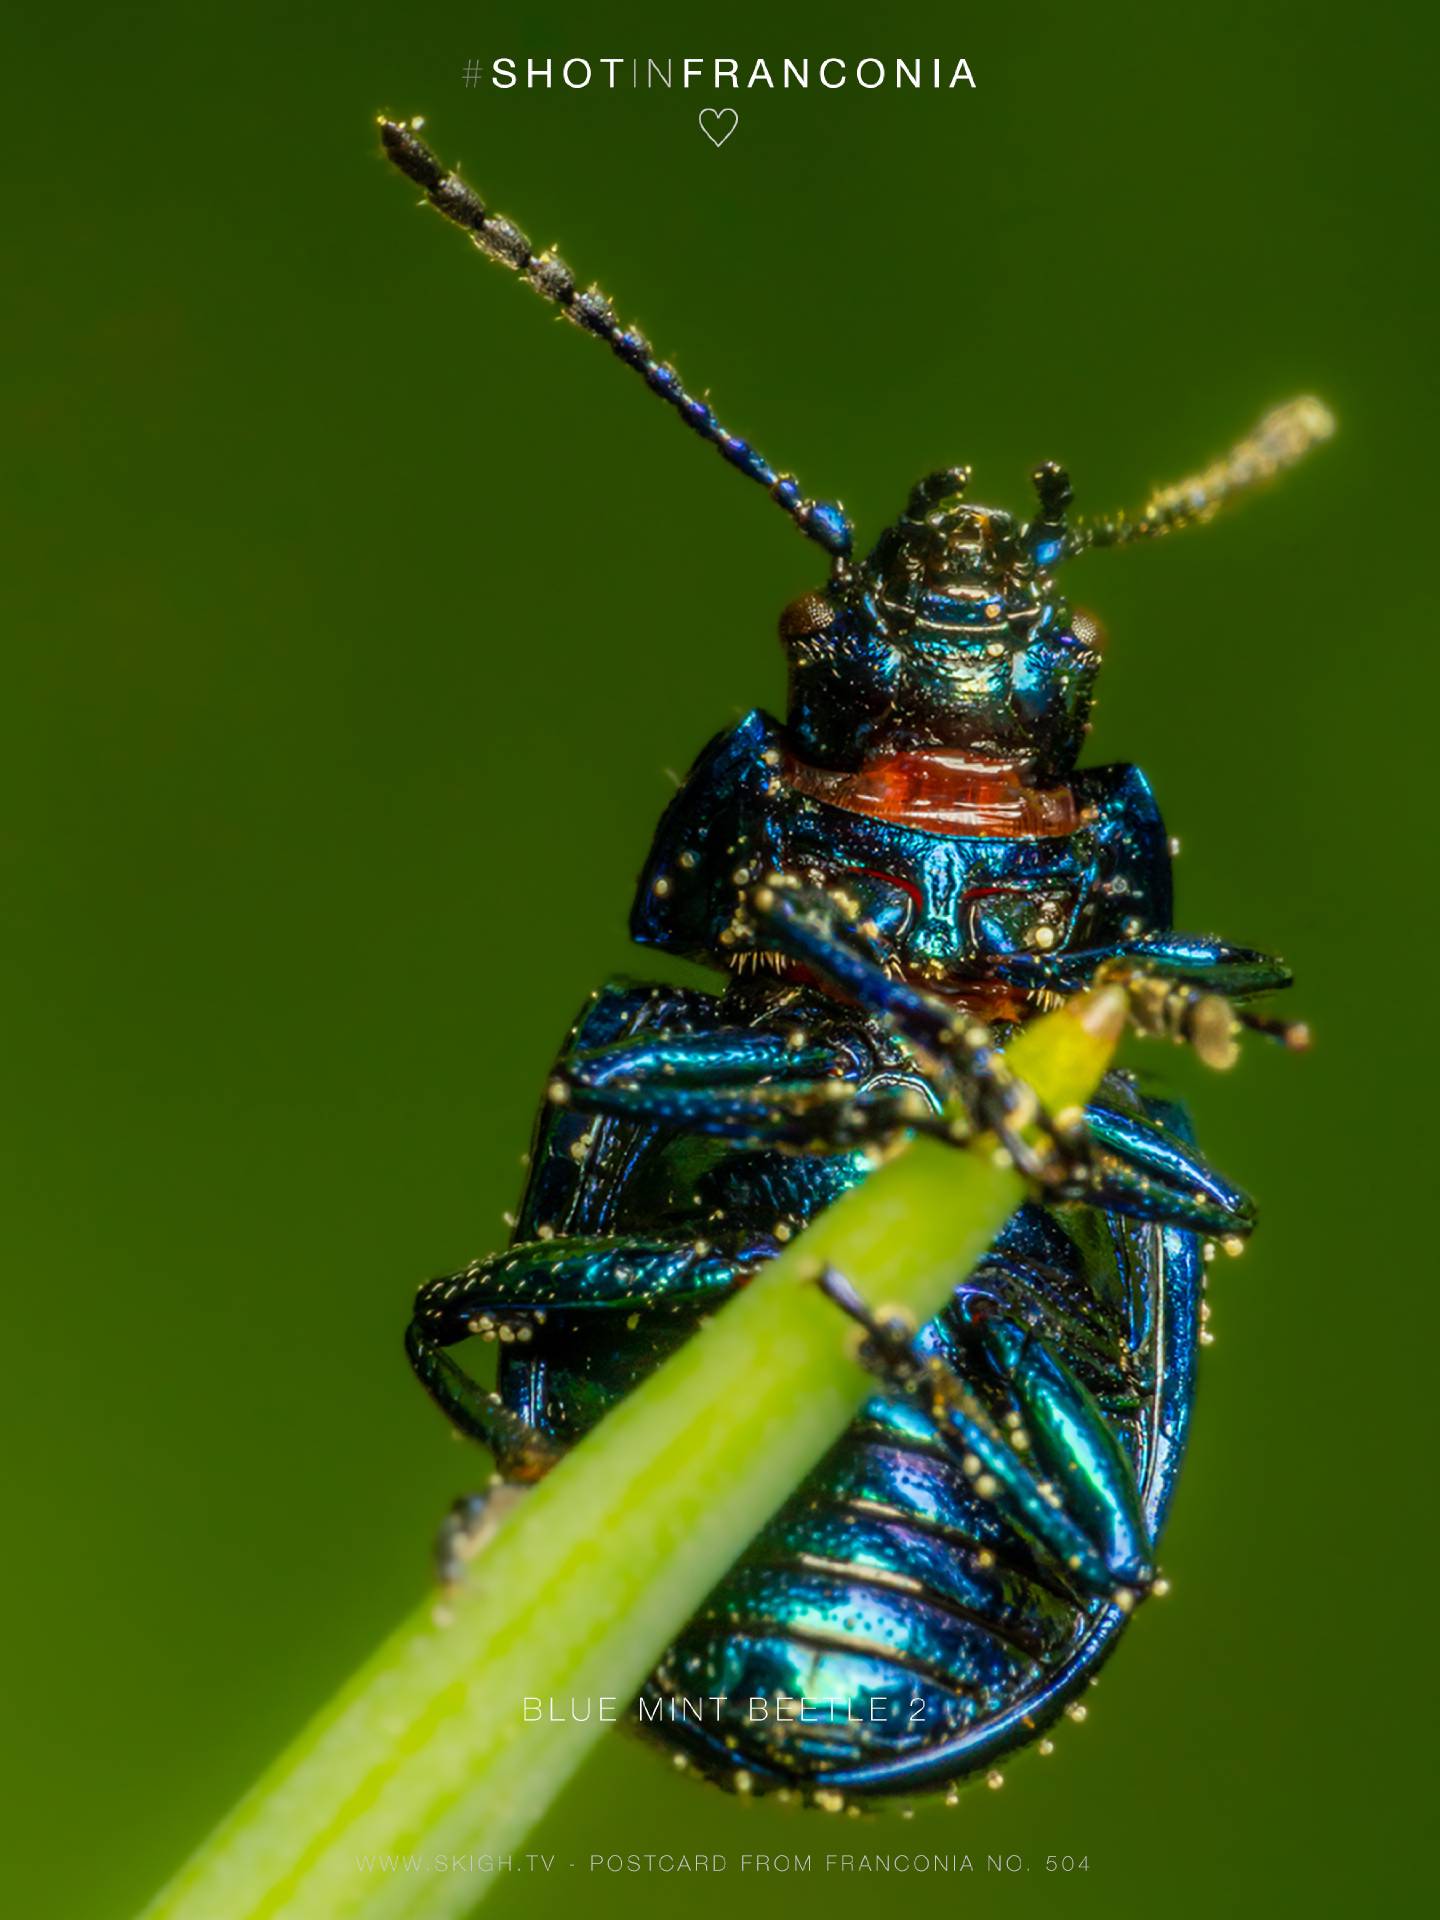 Blue mint beetle 2